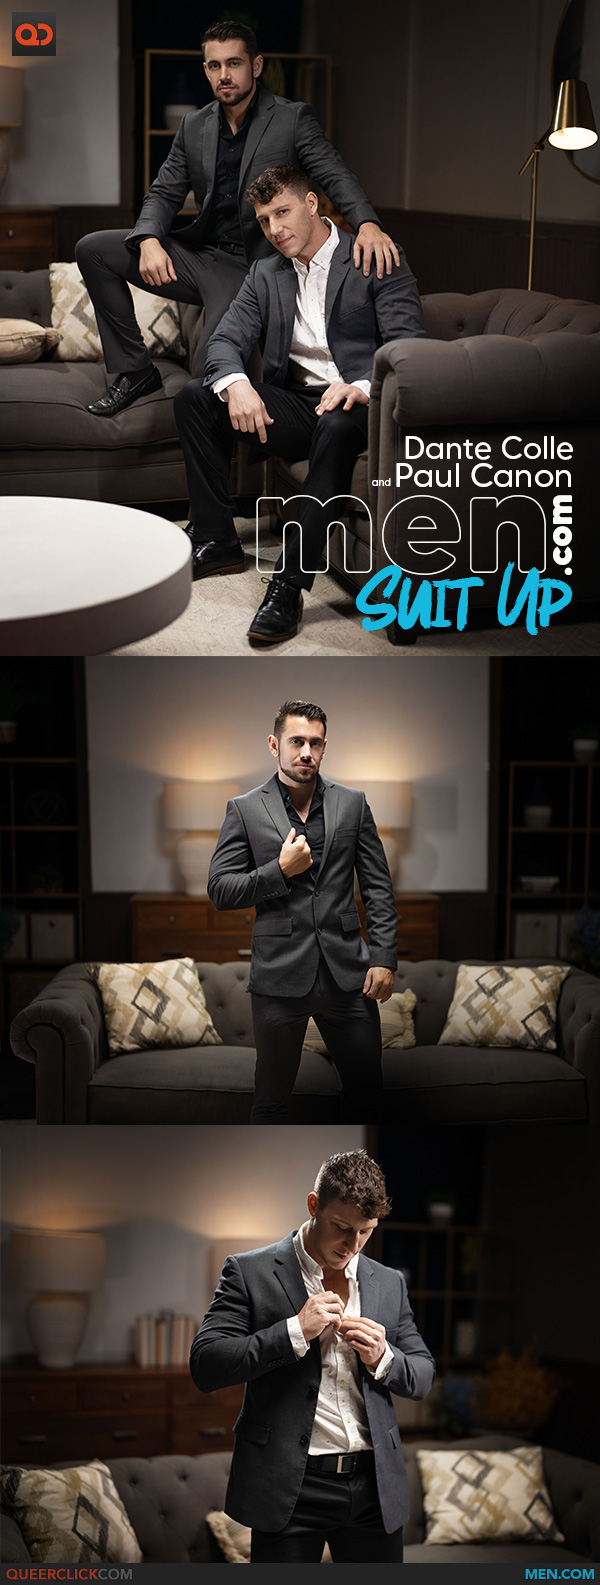 Men.com: Dante Colle and Paul Canon - Suit Up